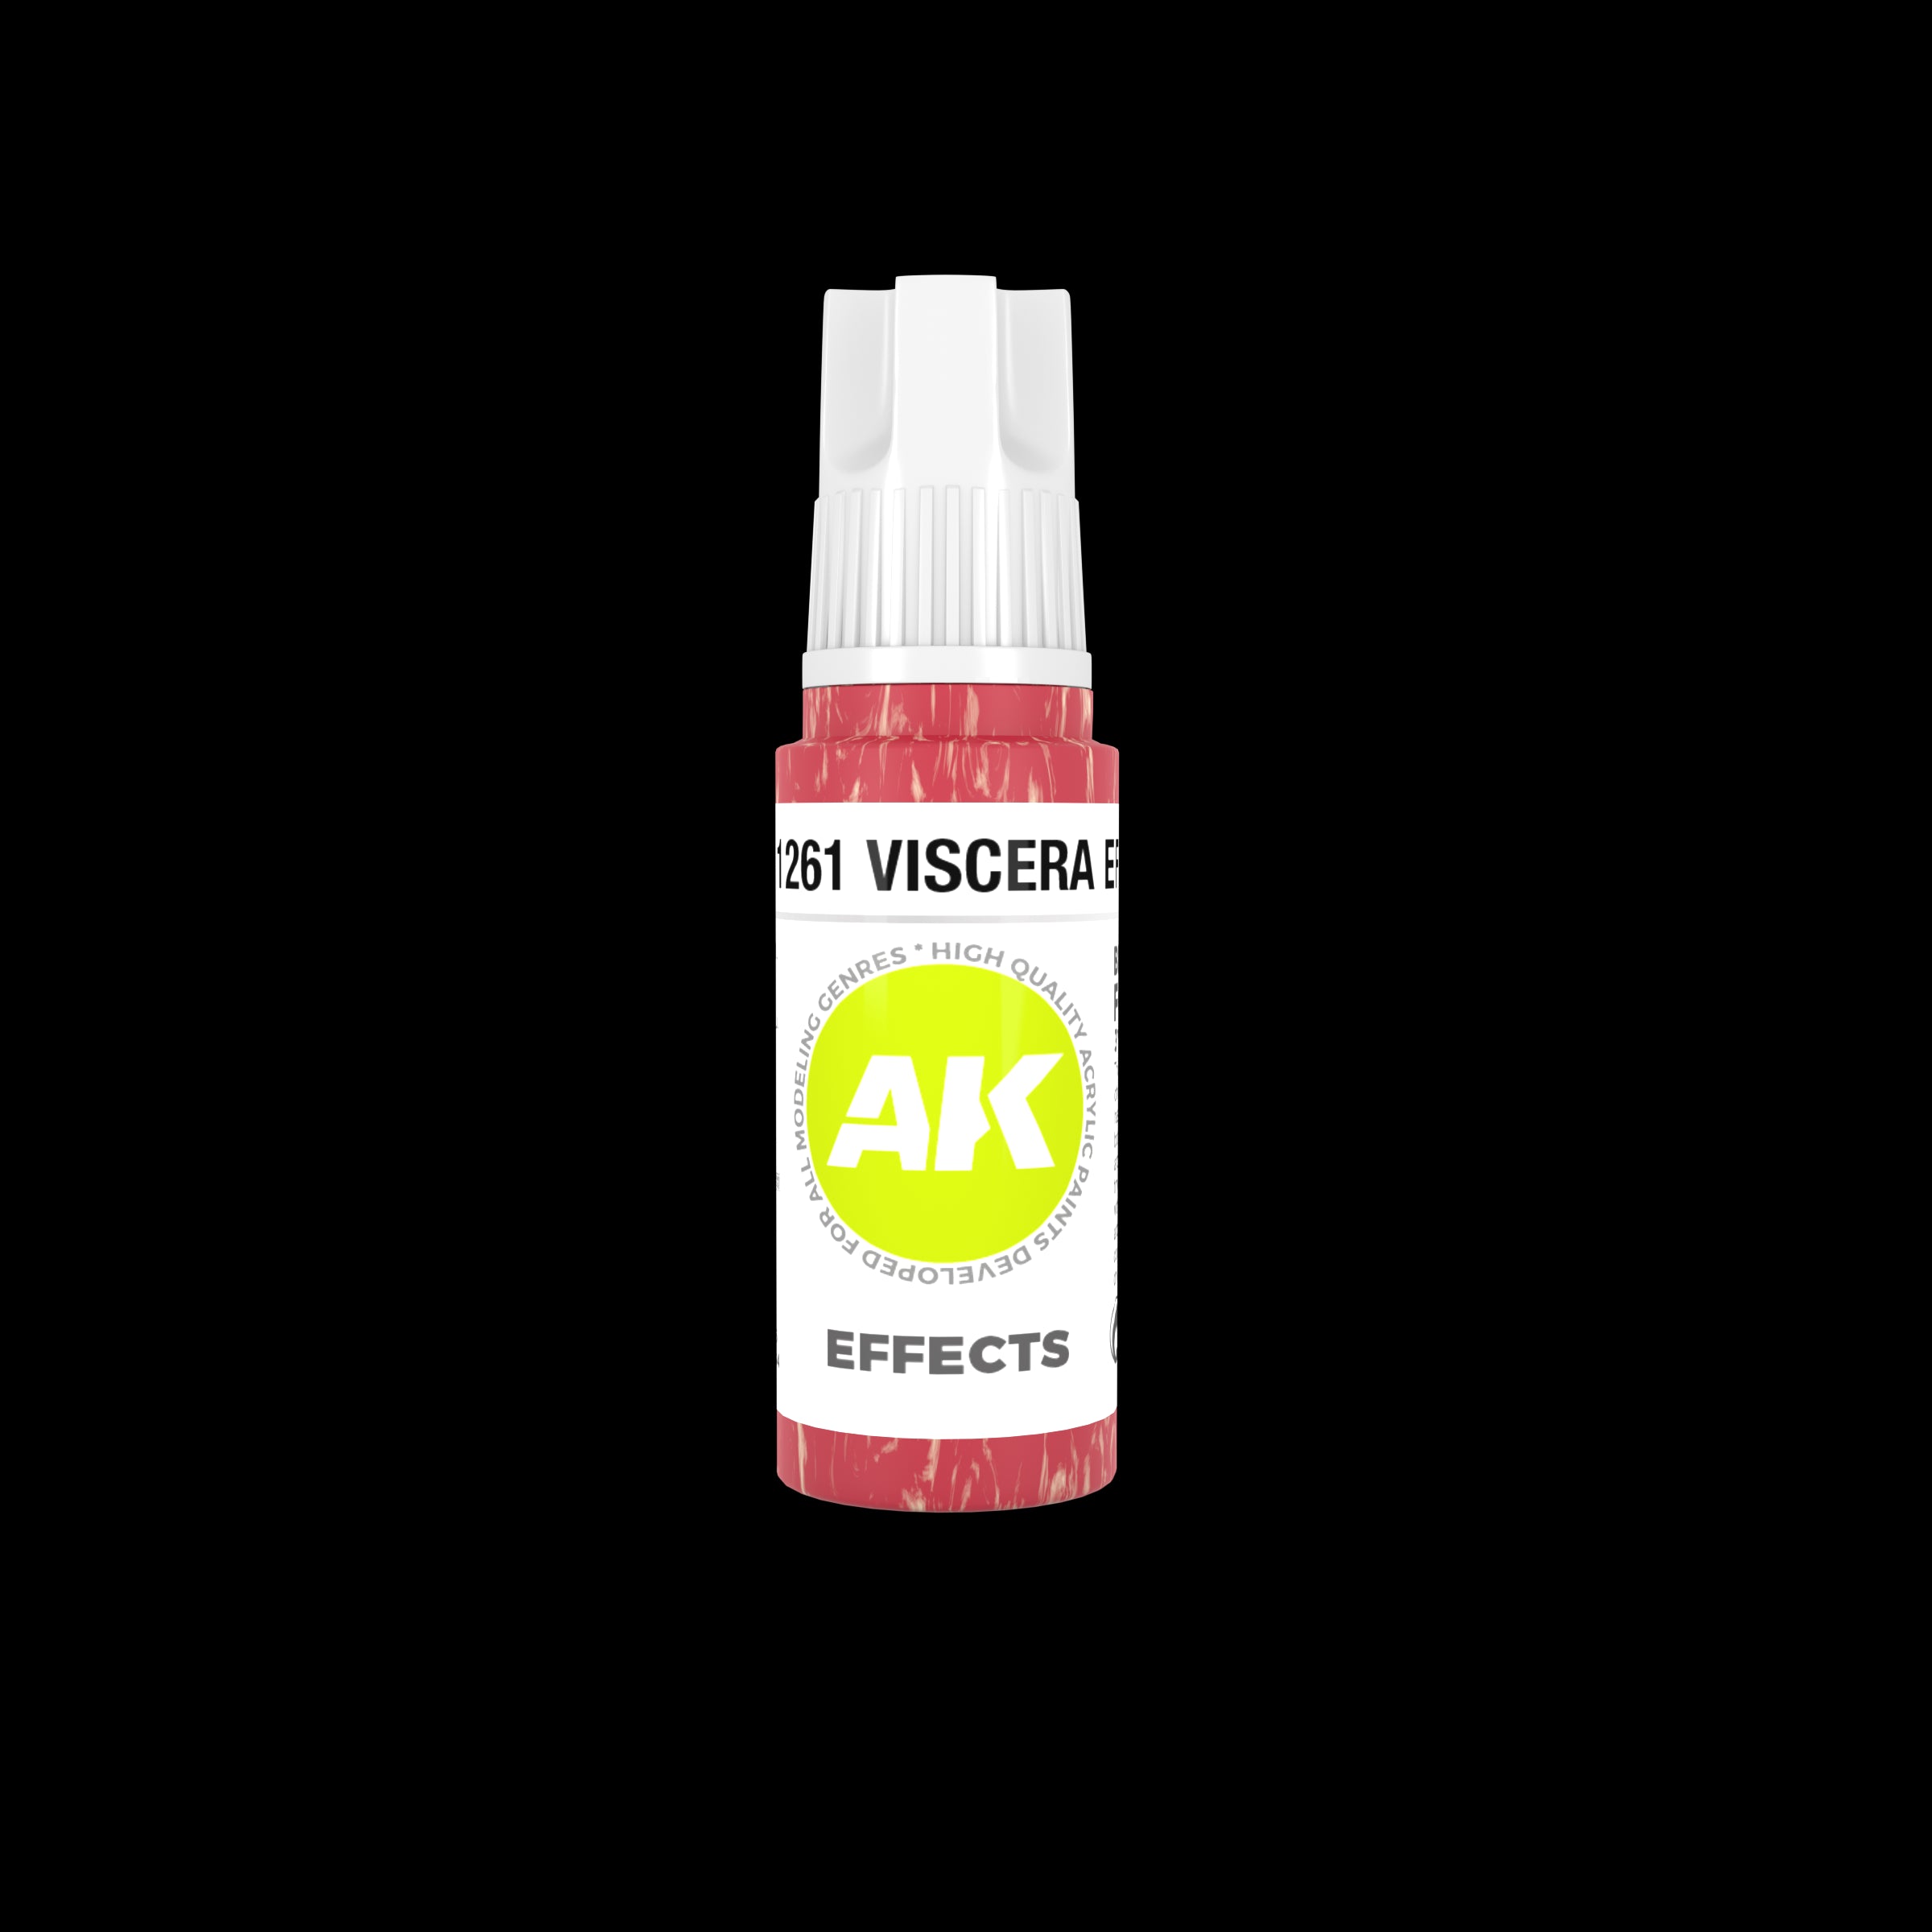 AK-11261 Visceral effects 17 ml